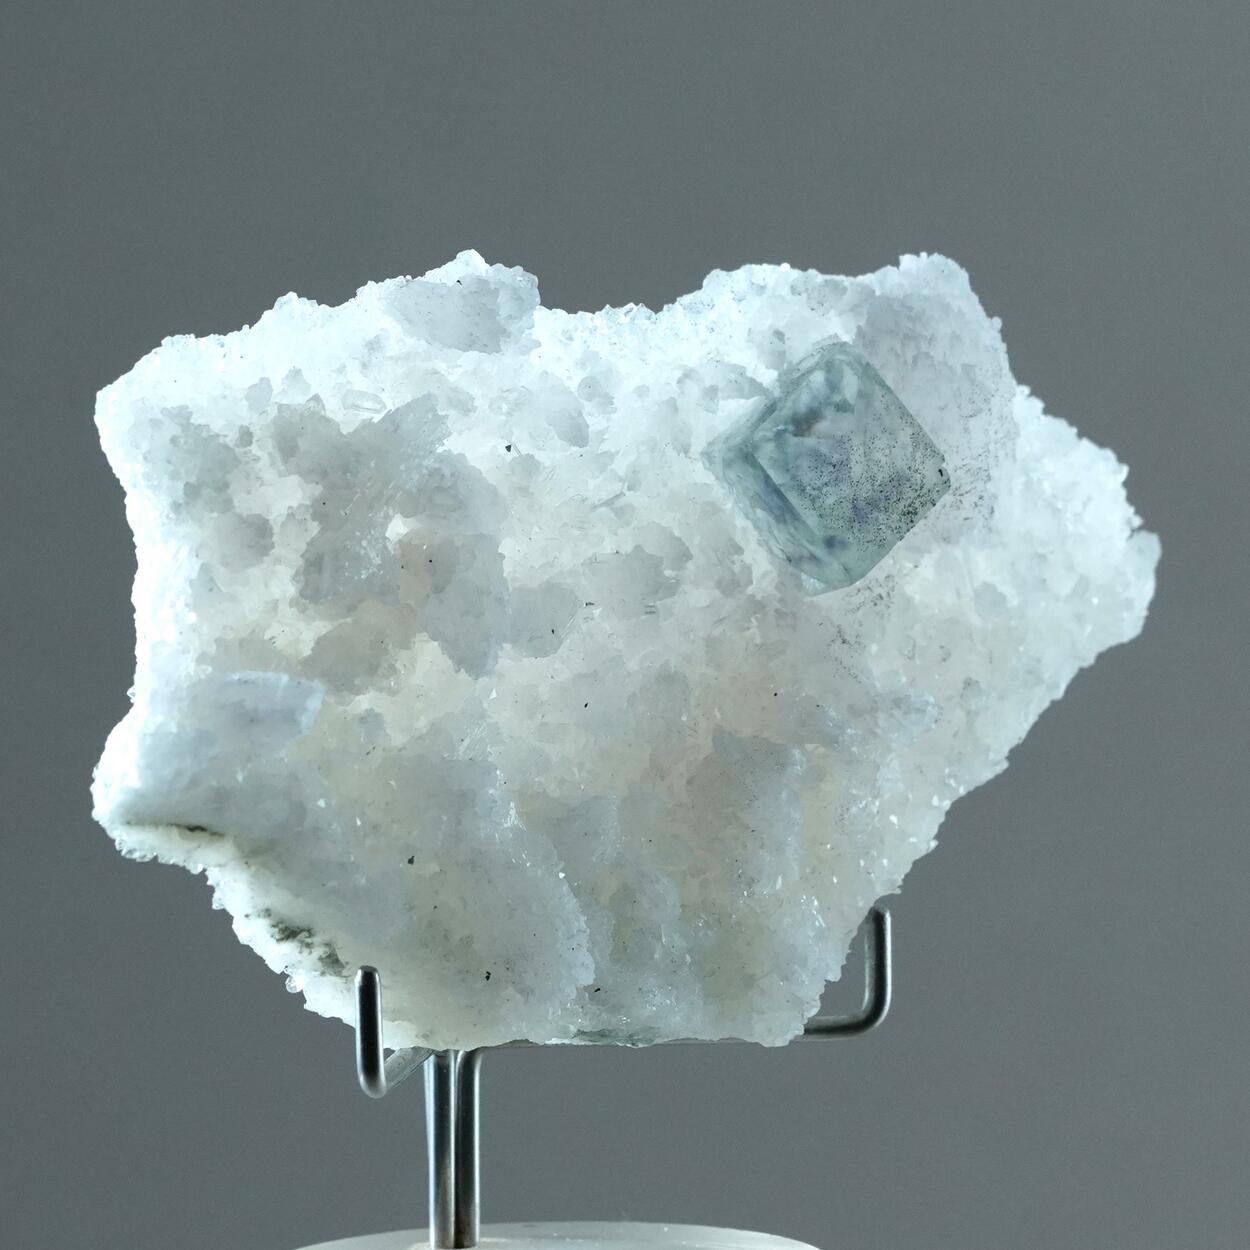 Fluorite On Manganoan Calcite